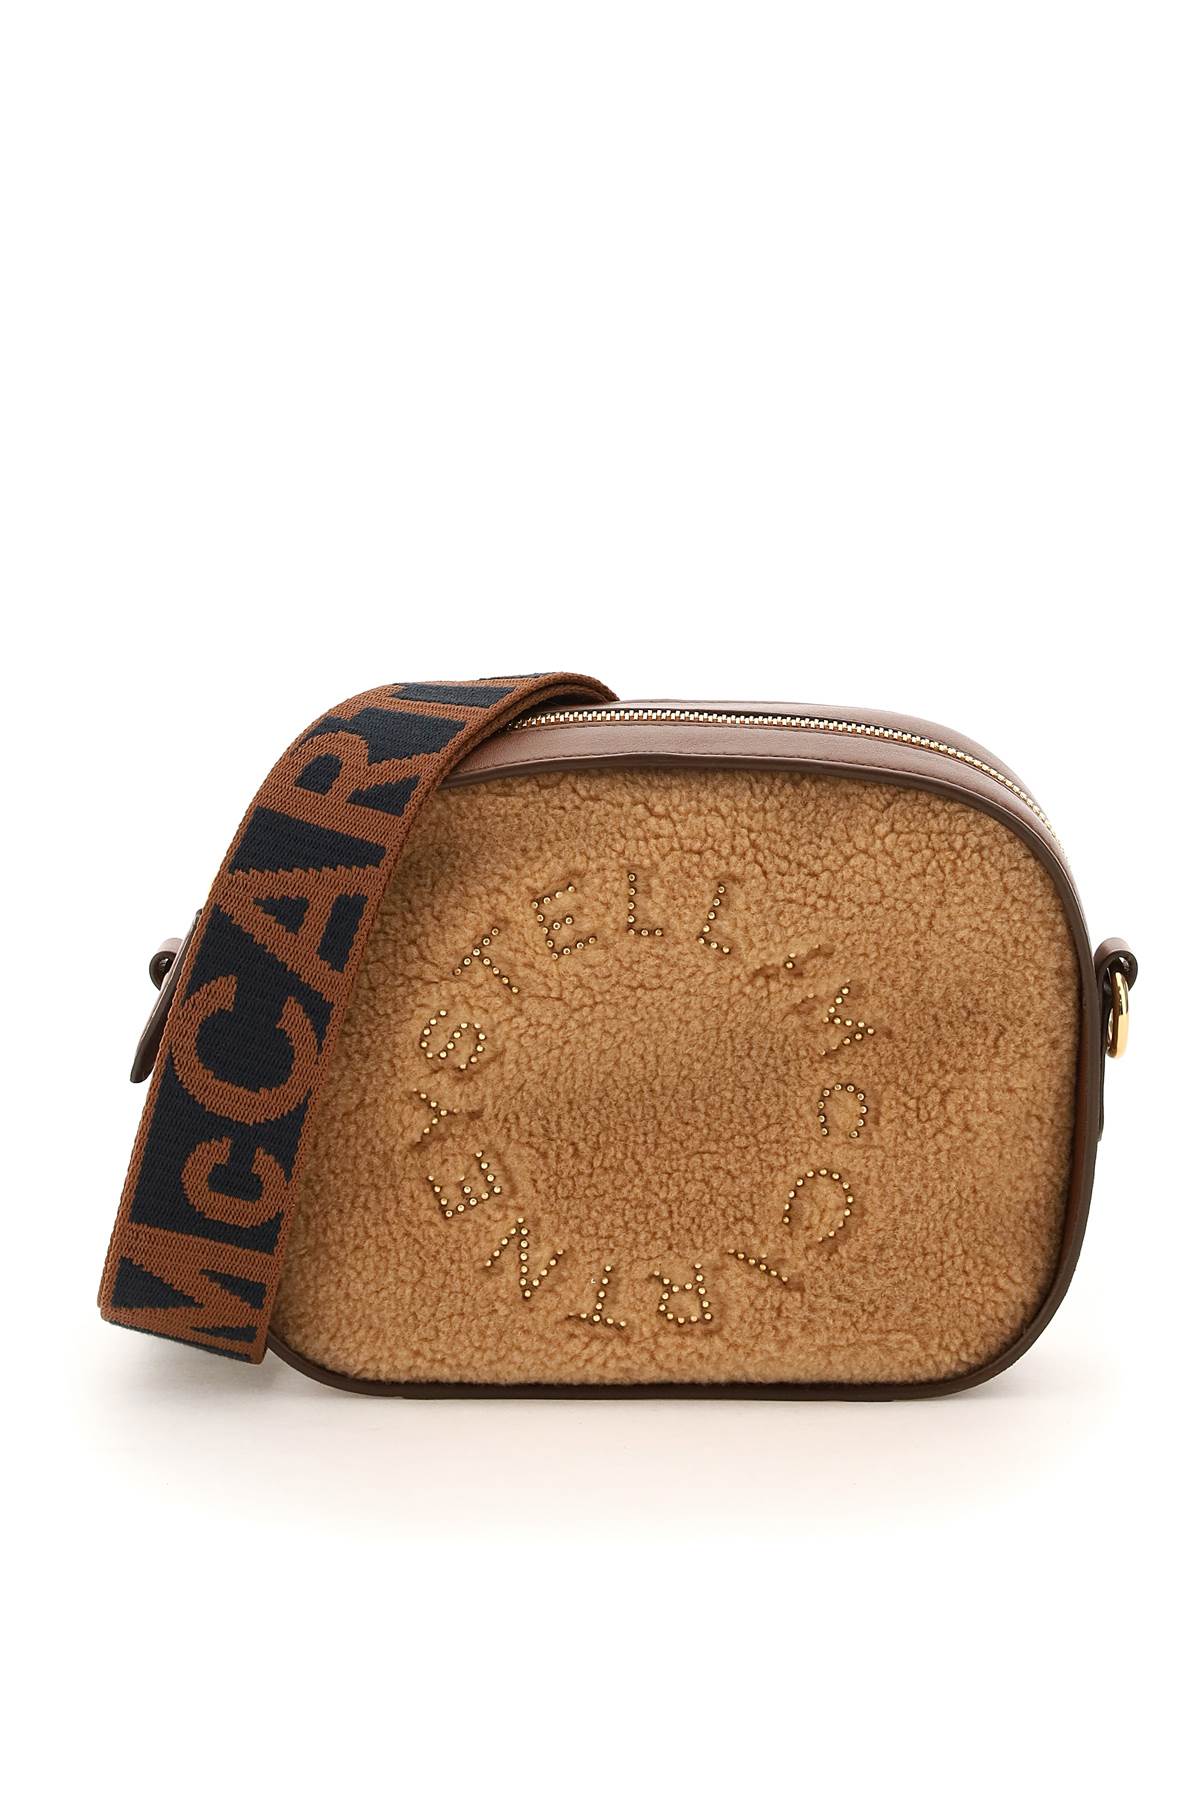 Stella McCartney Faux Shearling Camera Bag